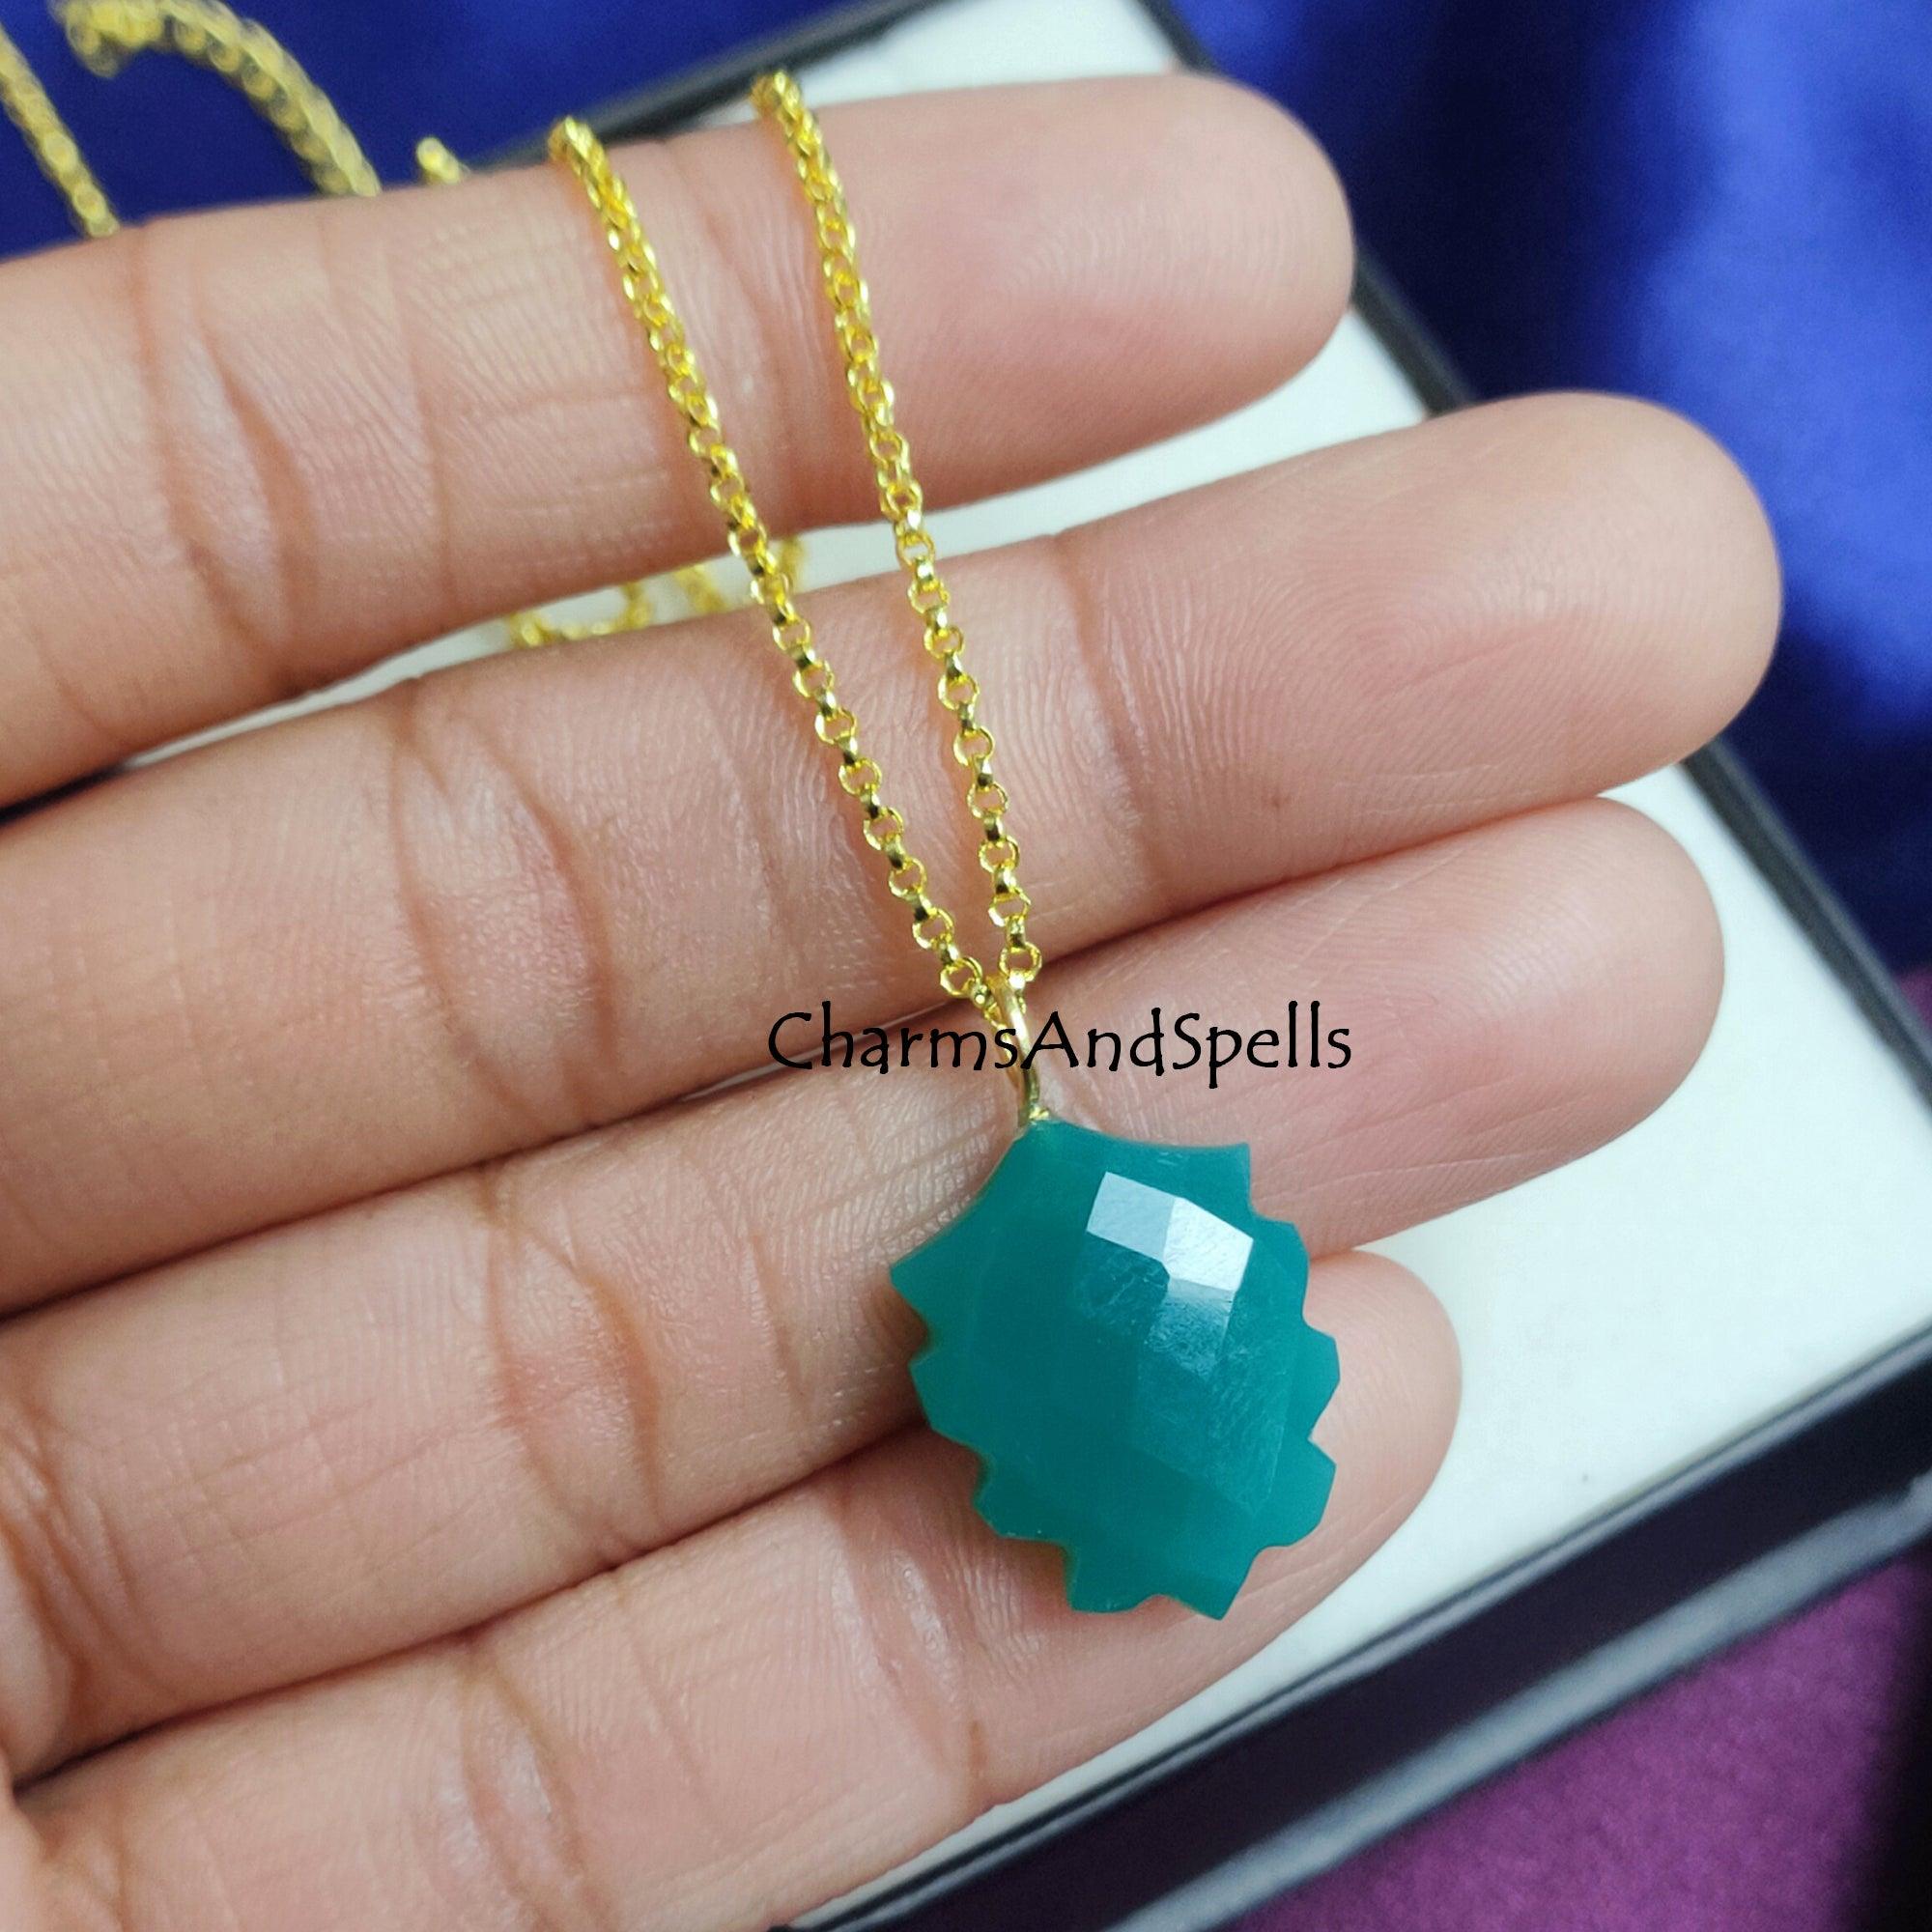 Natural Green Onyx Pendant, Leaf Design Pendant Necklace, Gemstone Pendant, Handmade Jewelry, Leaf Pendant, Chain Necklace, Engagement Gift